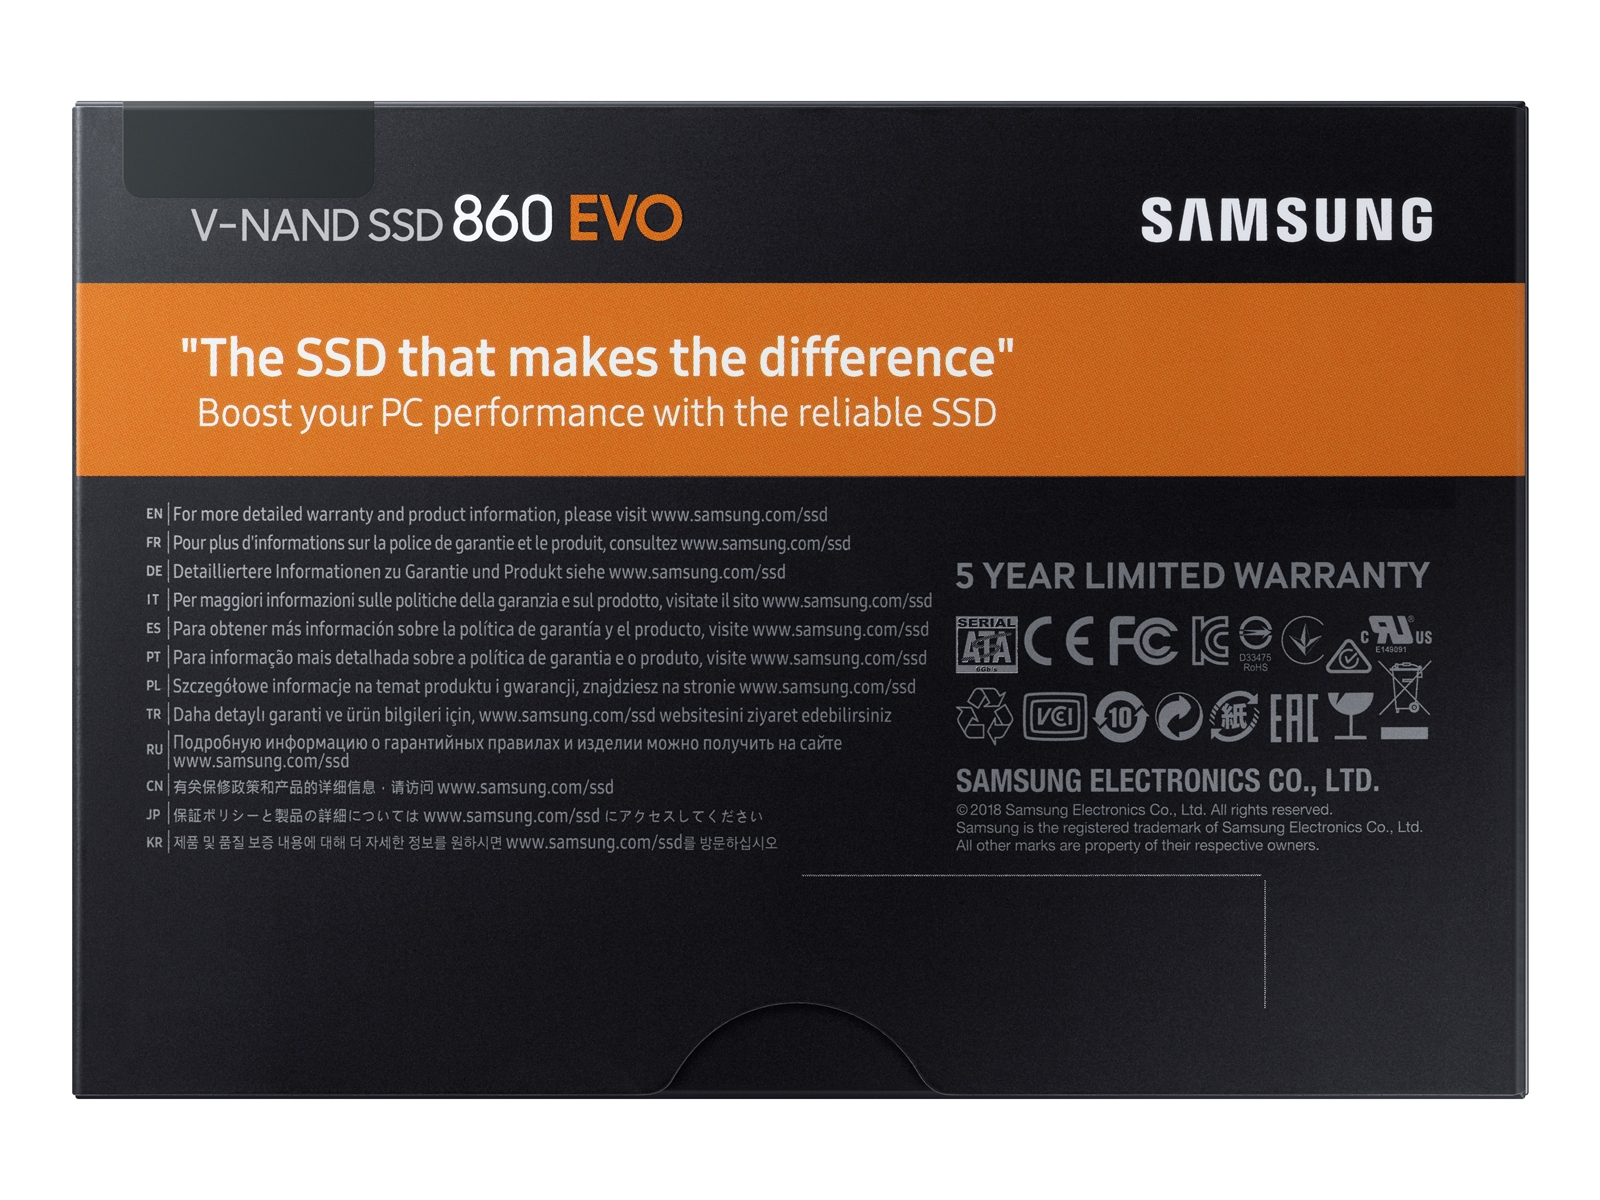 SSD 860 EVO 2.5" SATA III 250GB & Storage - MZ-76E250B/AM | US